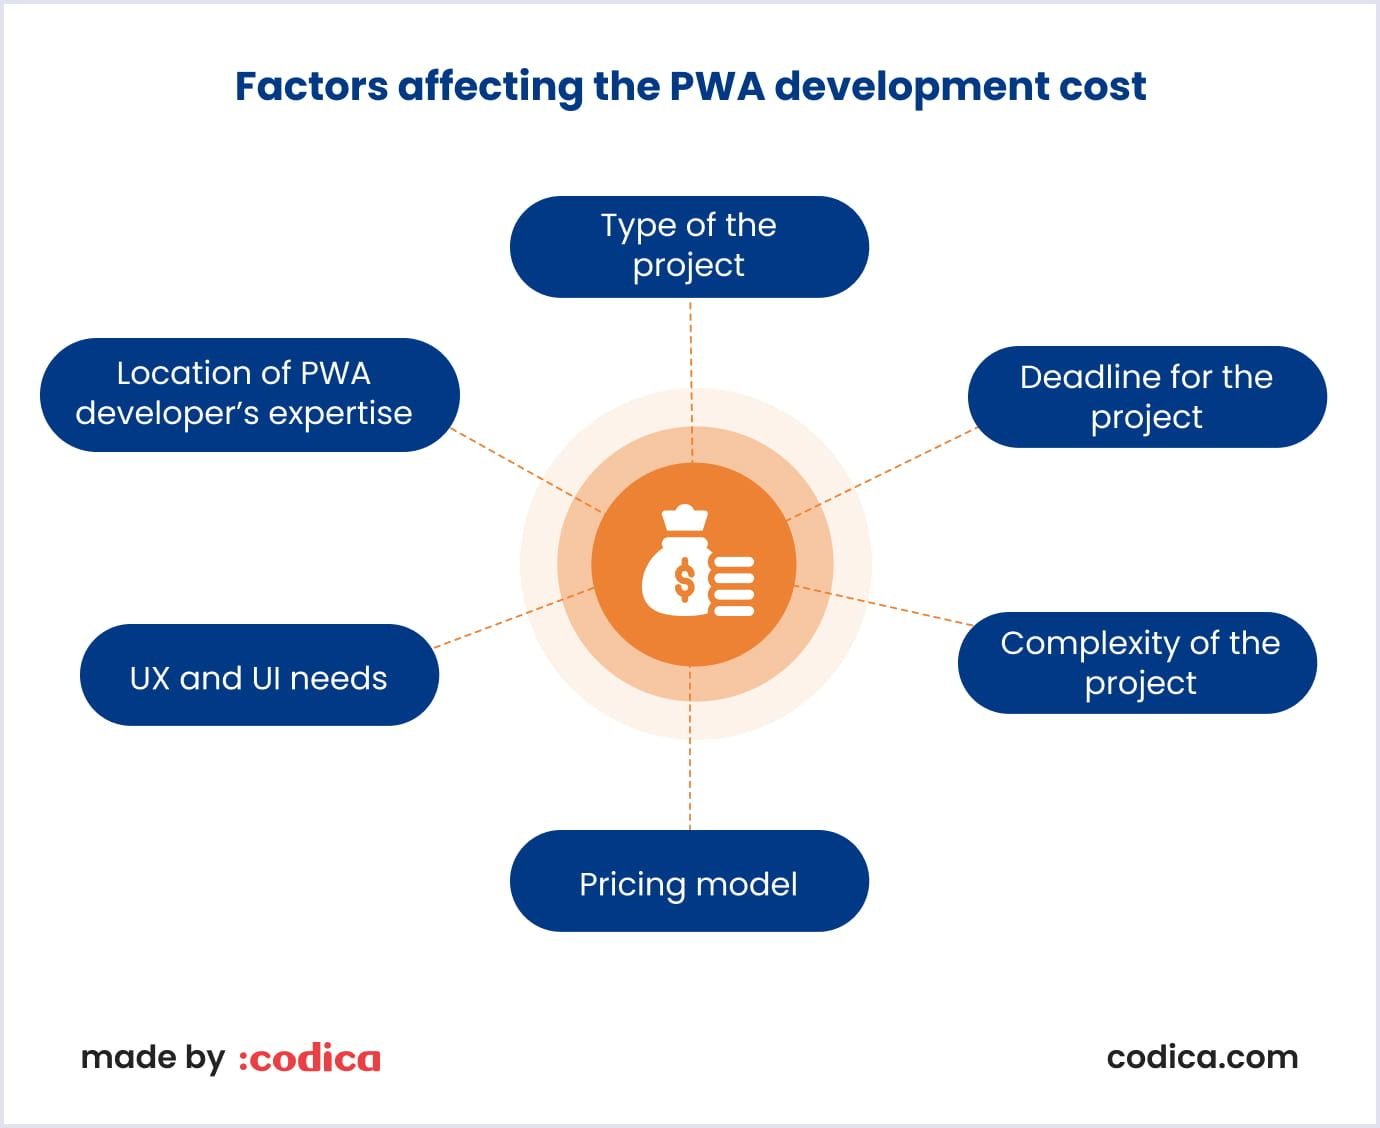 Major factors affecting the PWA development cost